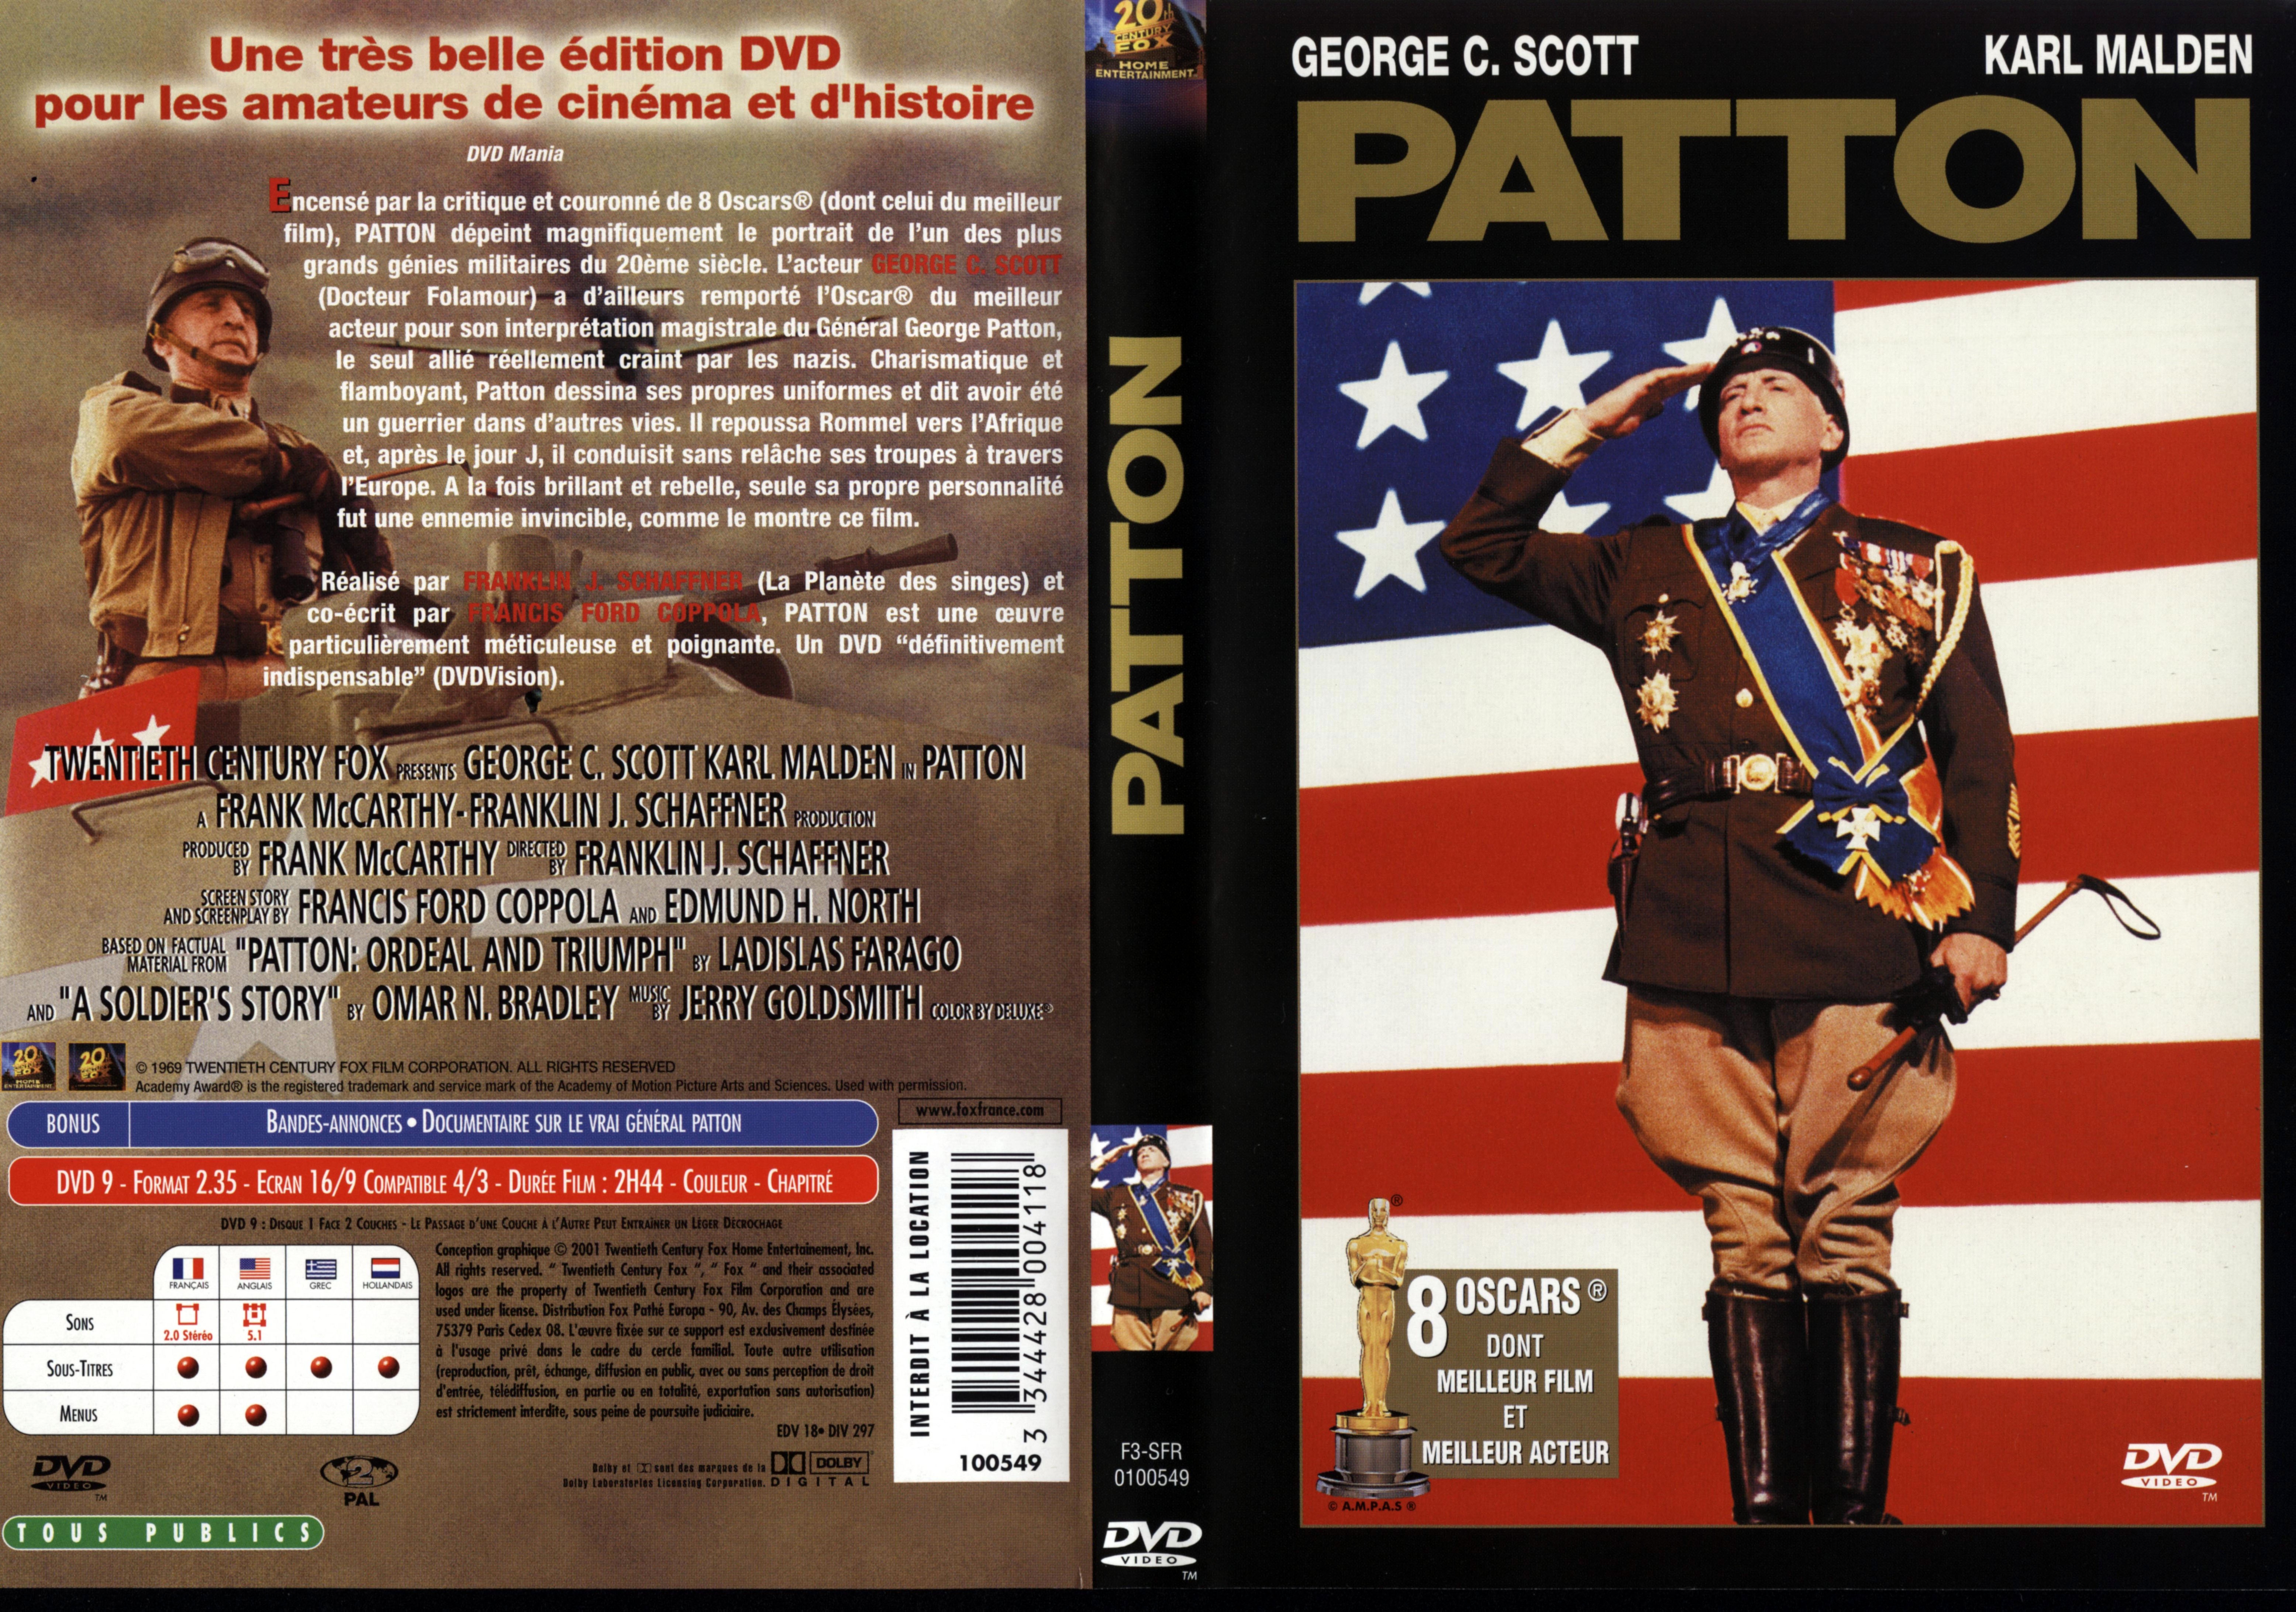 Jaquette DVD Patton v2